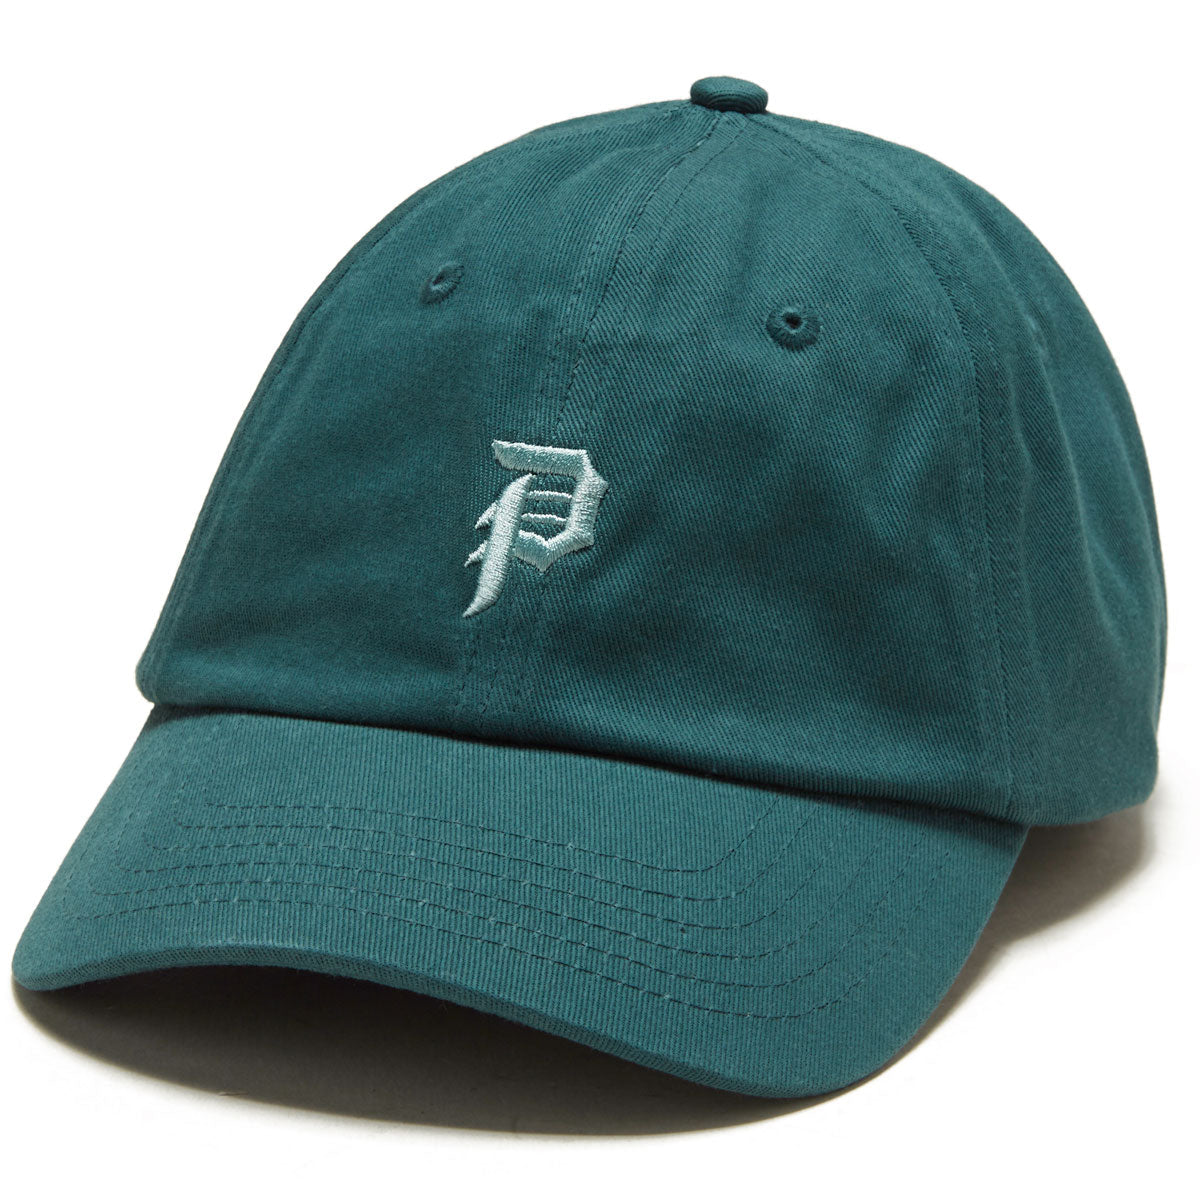 Primitive Dirty P Strapback Hat - Forest Green image 1